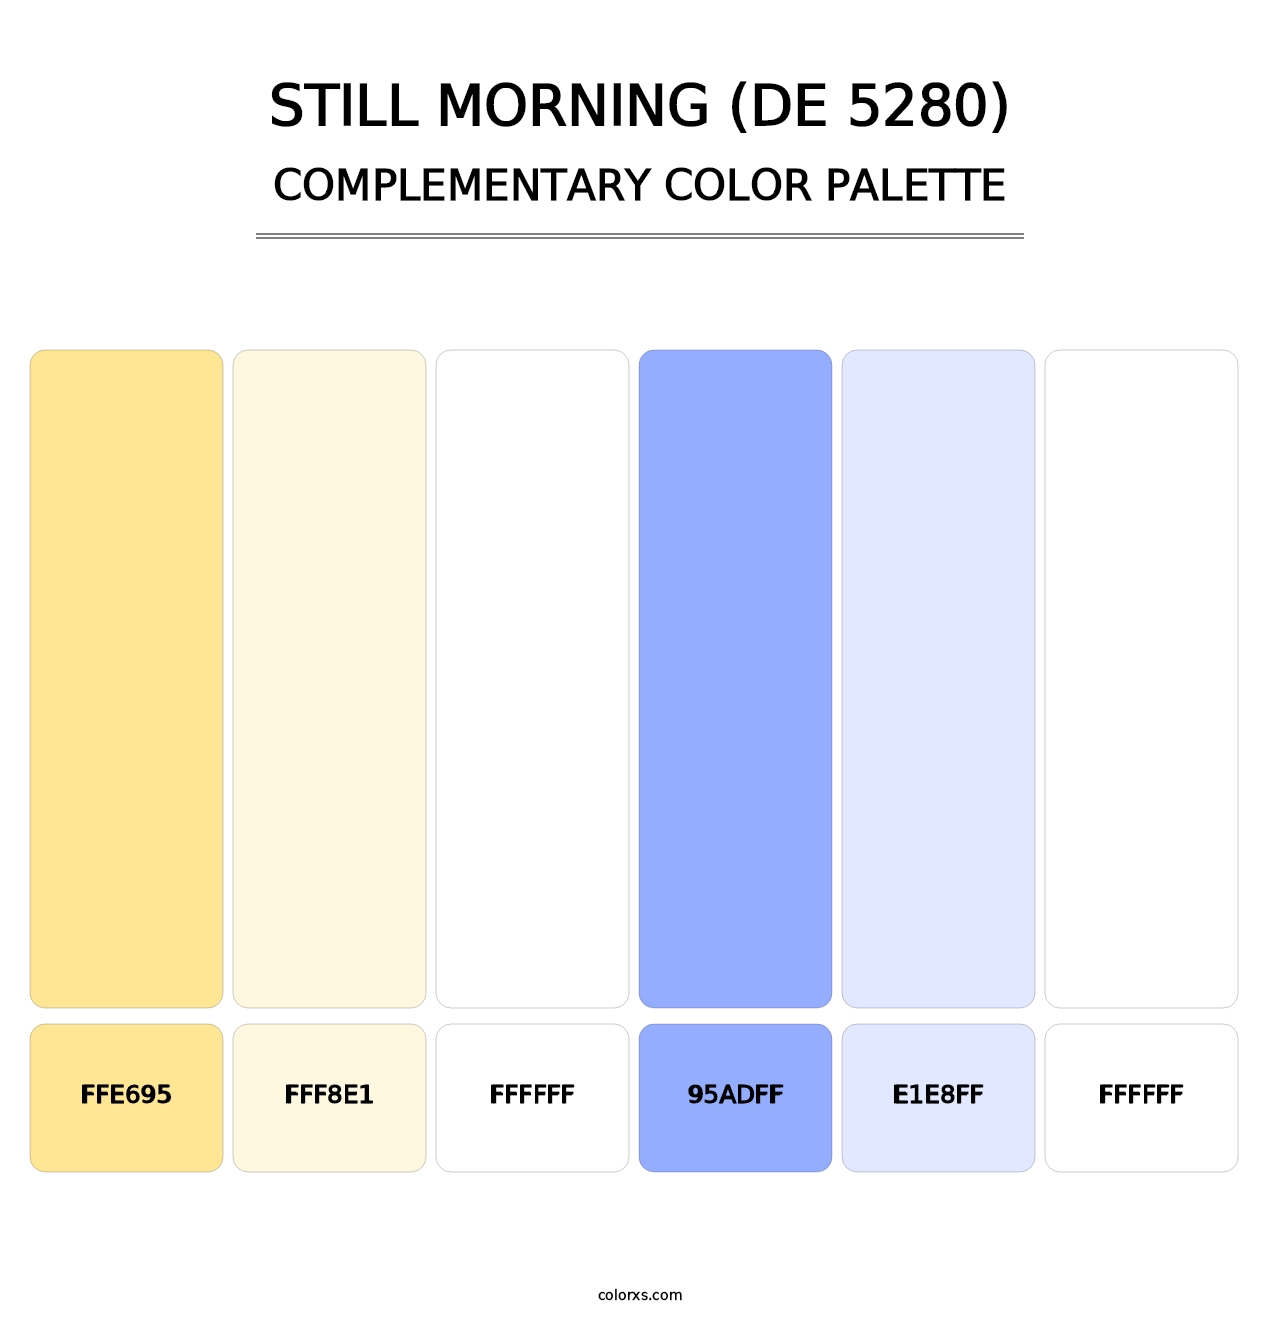 Still Morning (DE 5280) - Complementary Color Palette